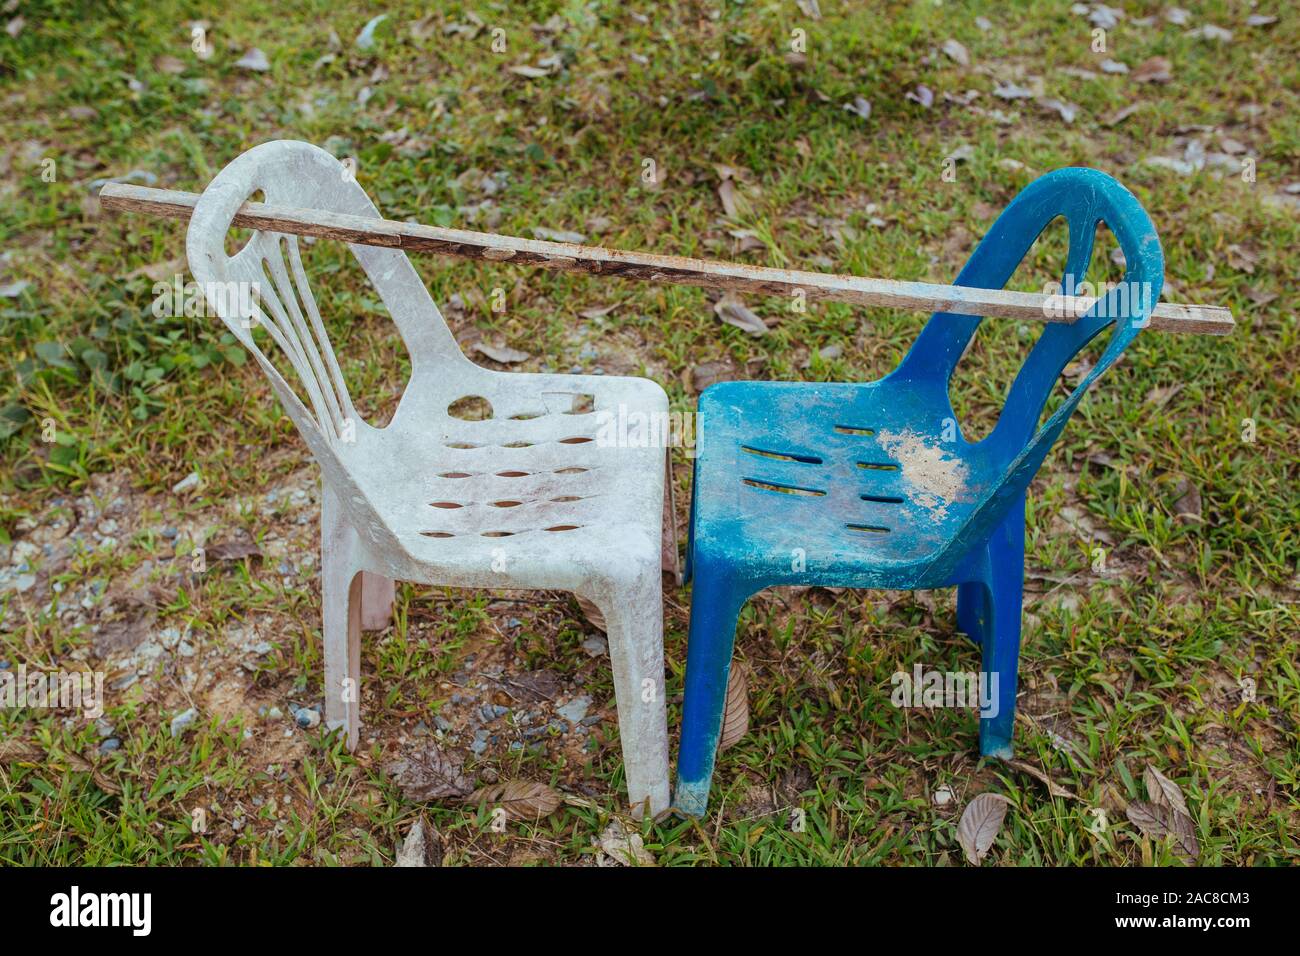 plastic summer chairs